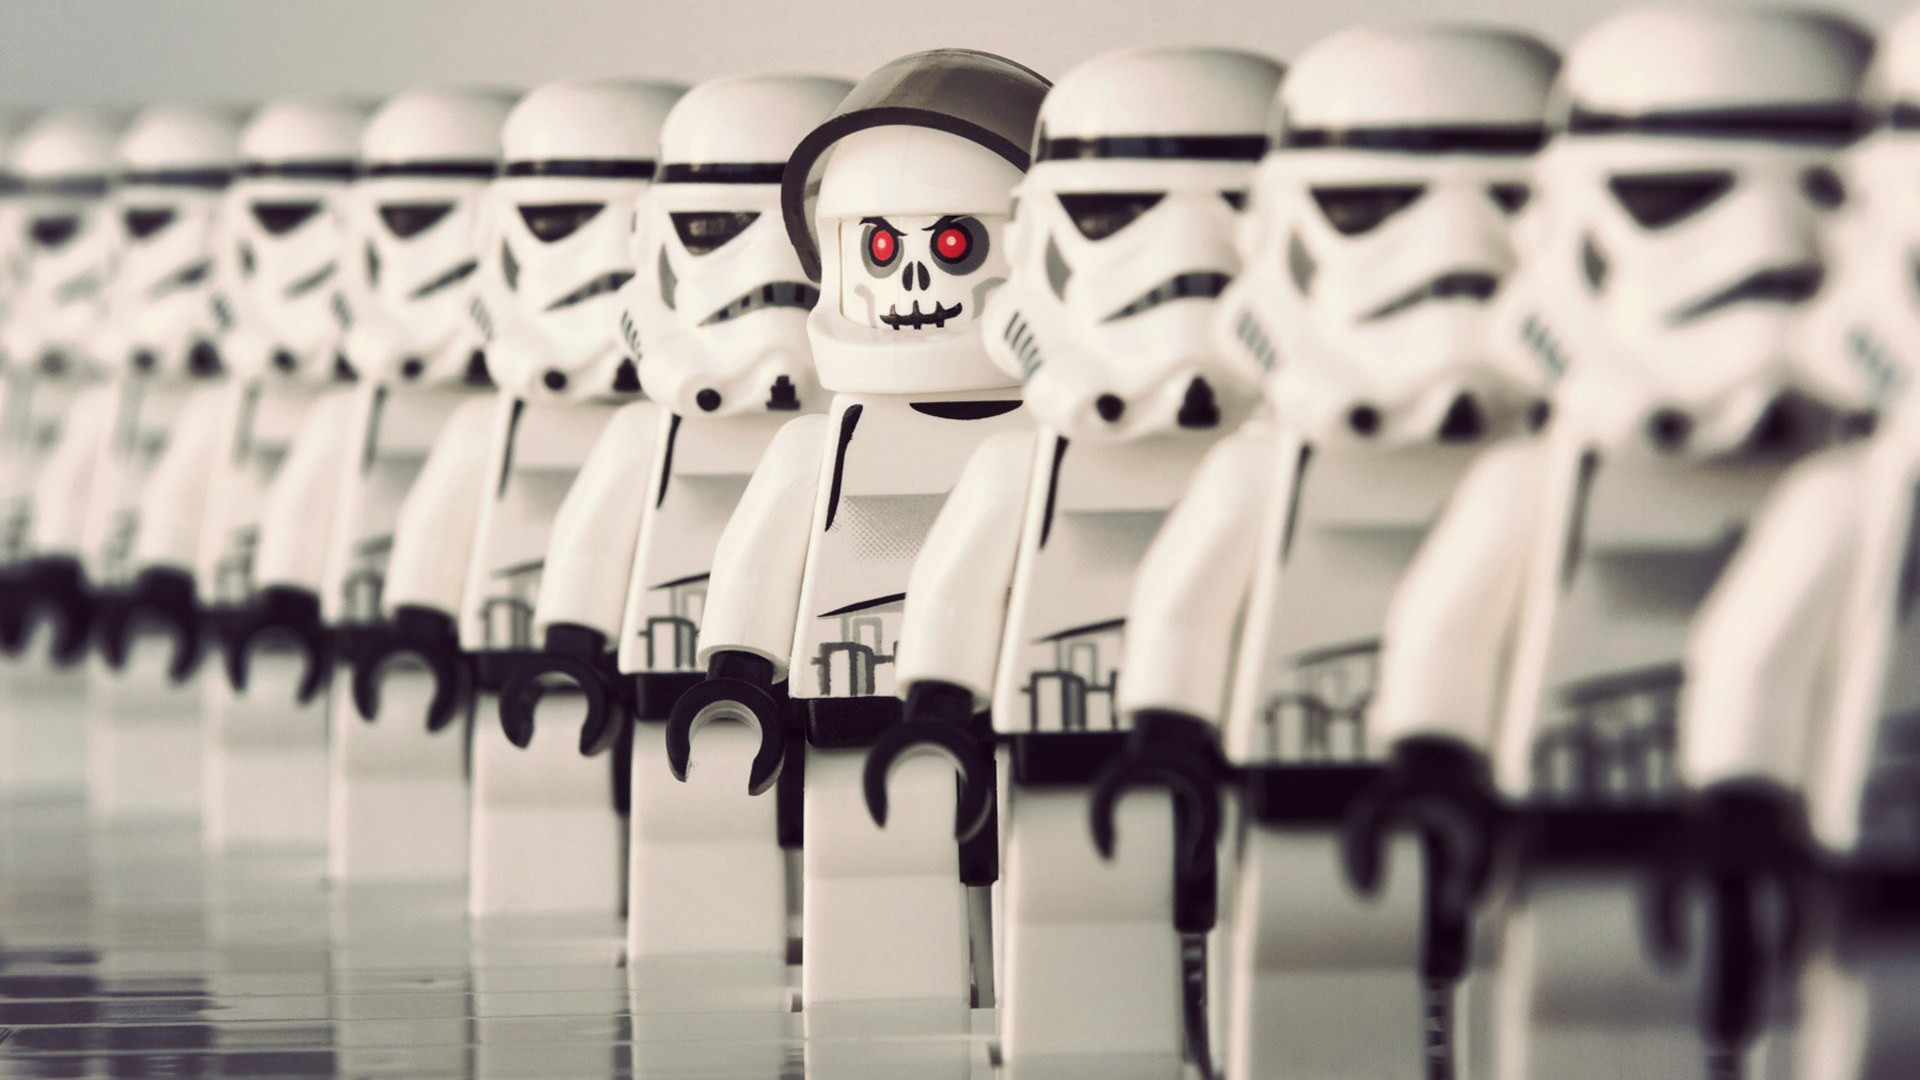 General 1920x1080 LEGO humor toys Star Wars stormtrooper helmet Imperial Forces figurines